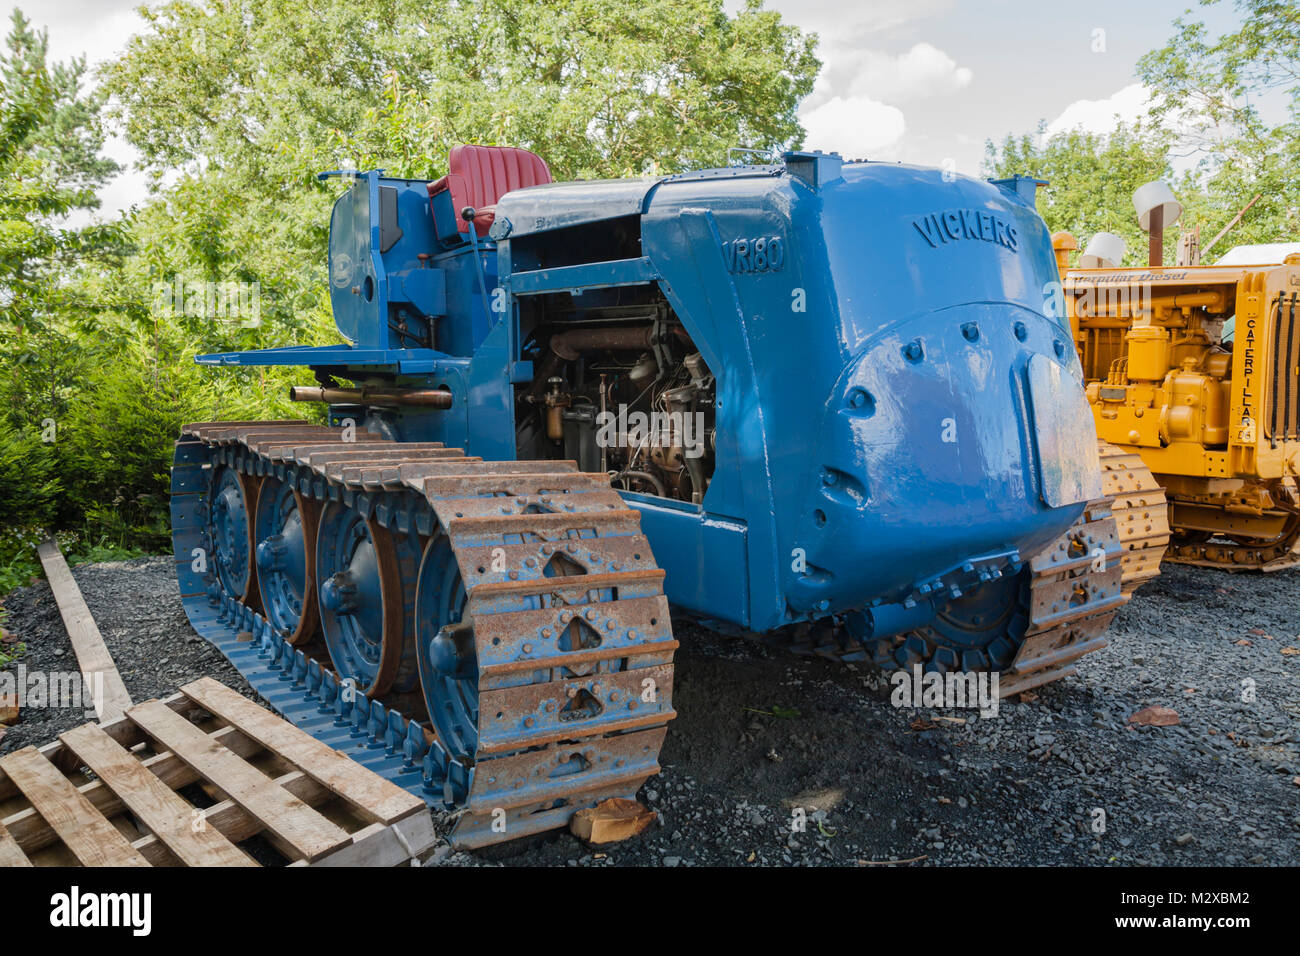 Close up photograph of a bulldozer, Vickers Vigor VR180 Stock Photo